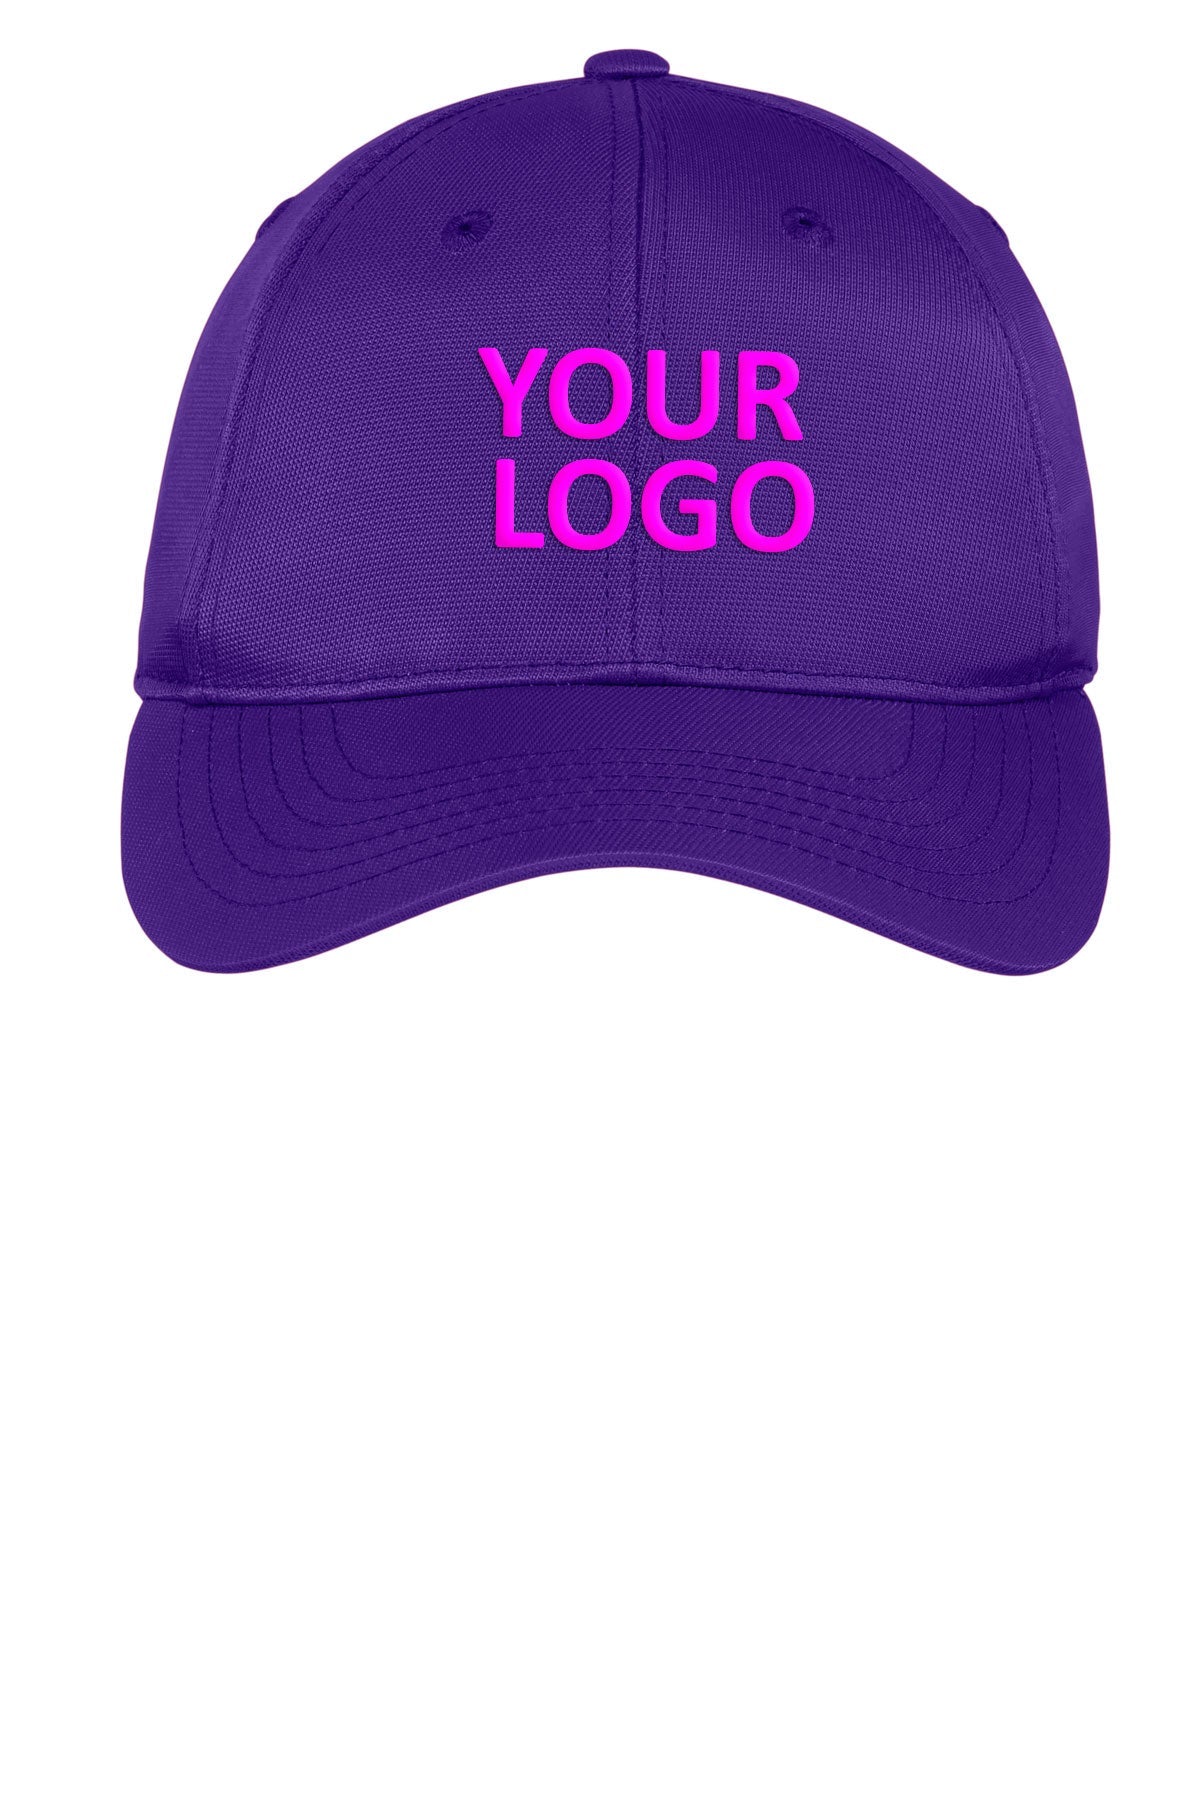 Sport-Tek Dry Zone Customized Nylon Caps, Purple